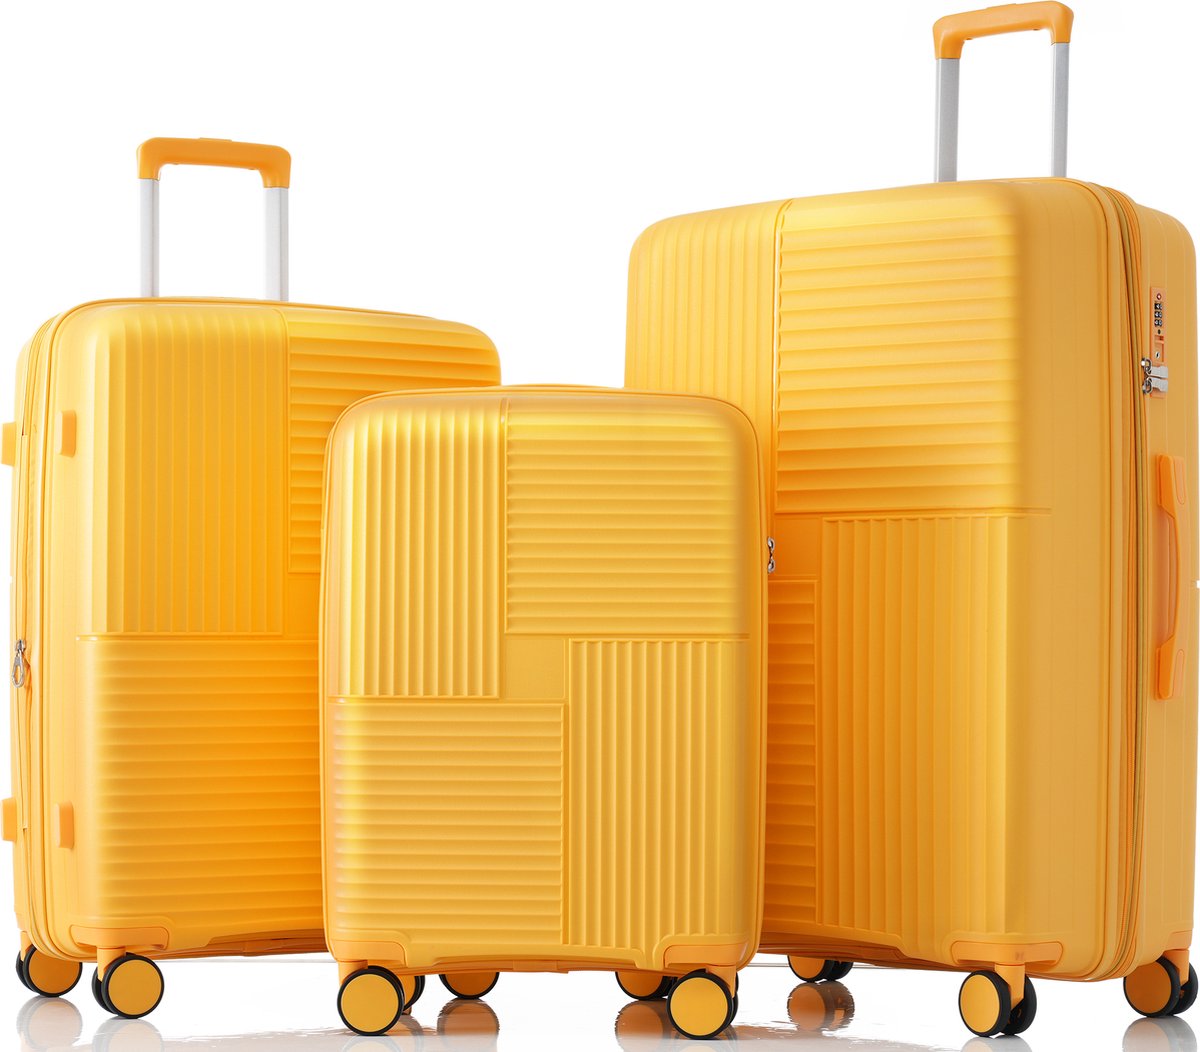 Bagagesets Uitbreidbaar PP Duurzame koffer Dubbele wielen TSA Lock-licht en duurzaam M-L-XL bagageset-geel